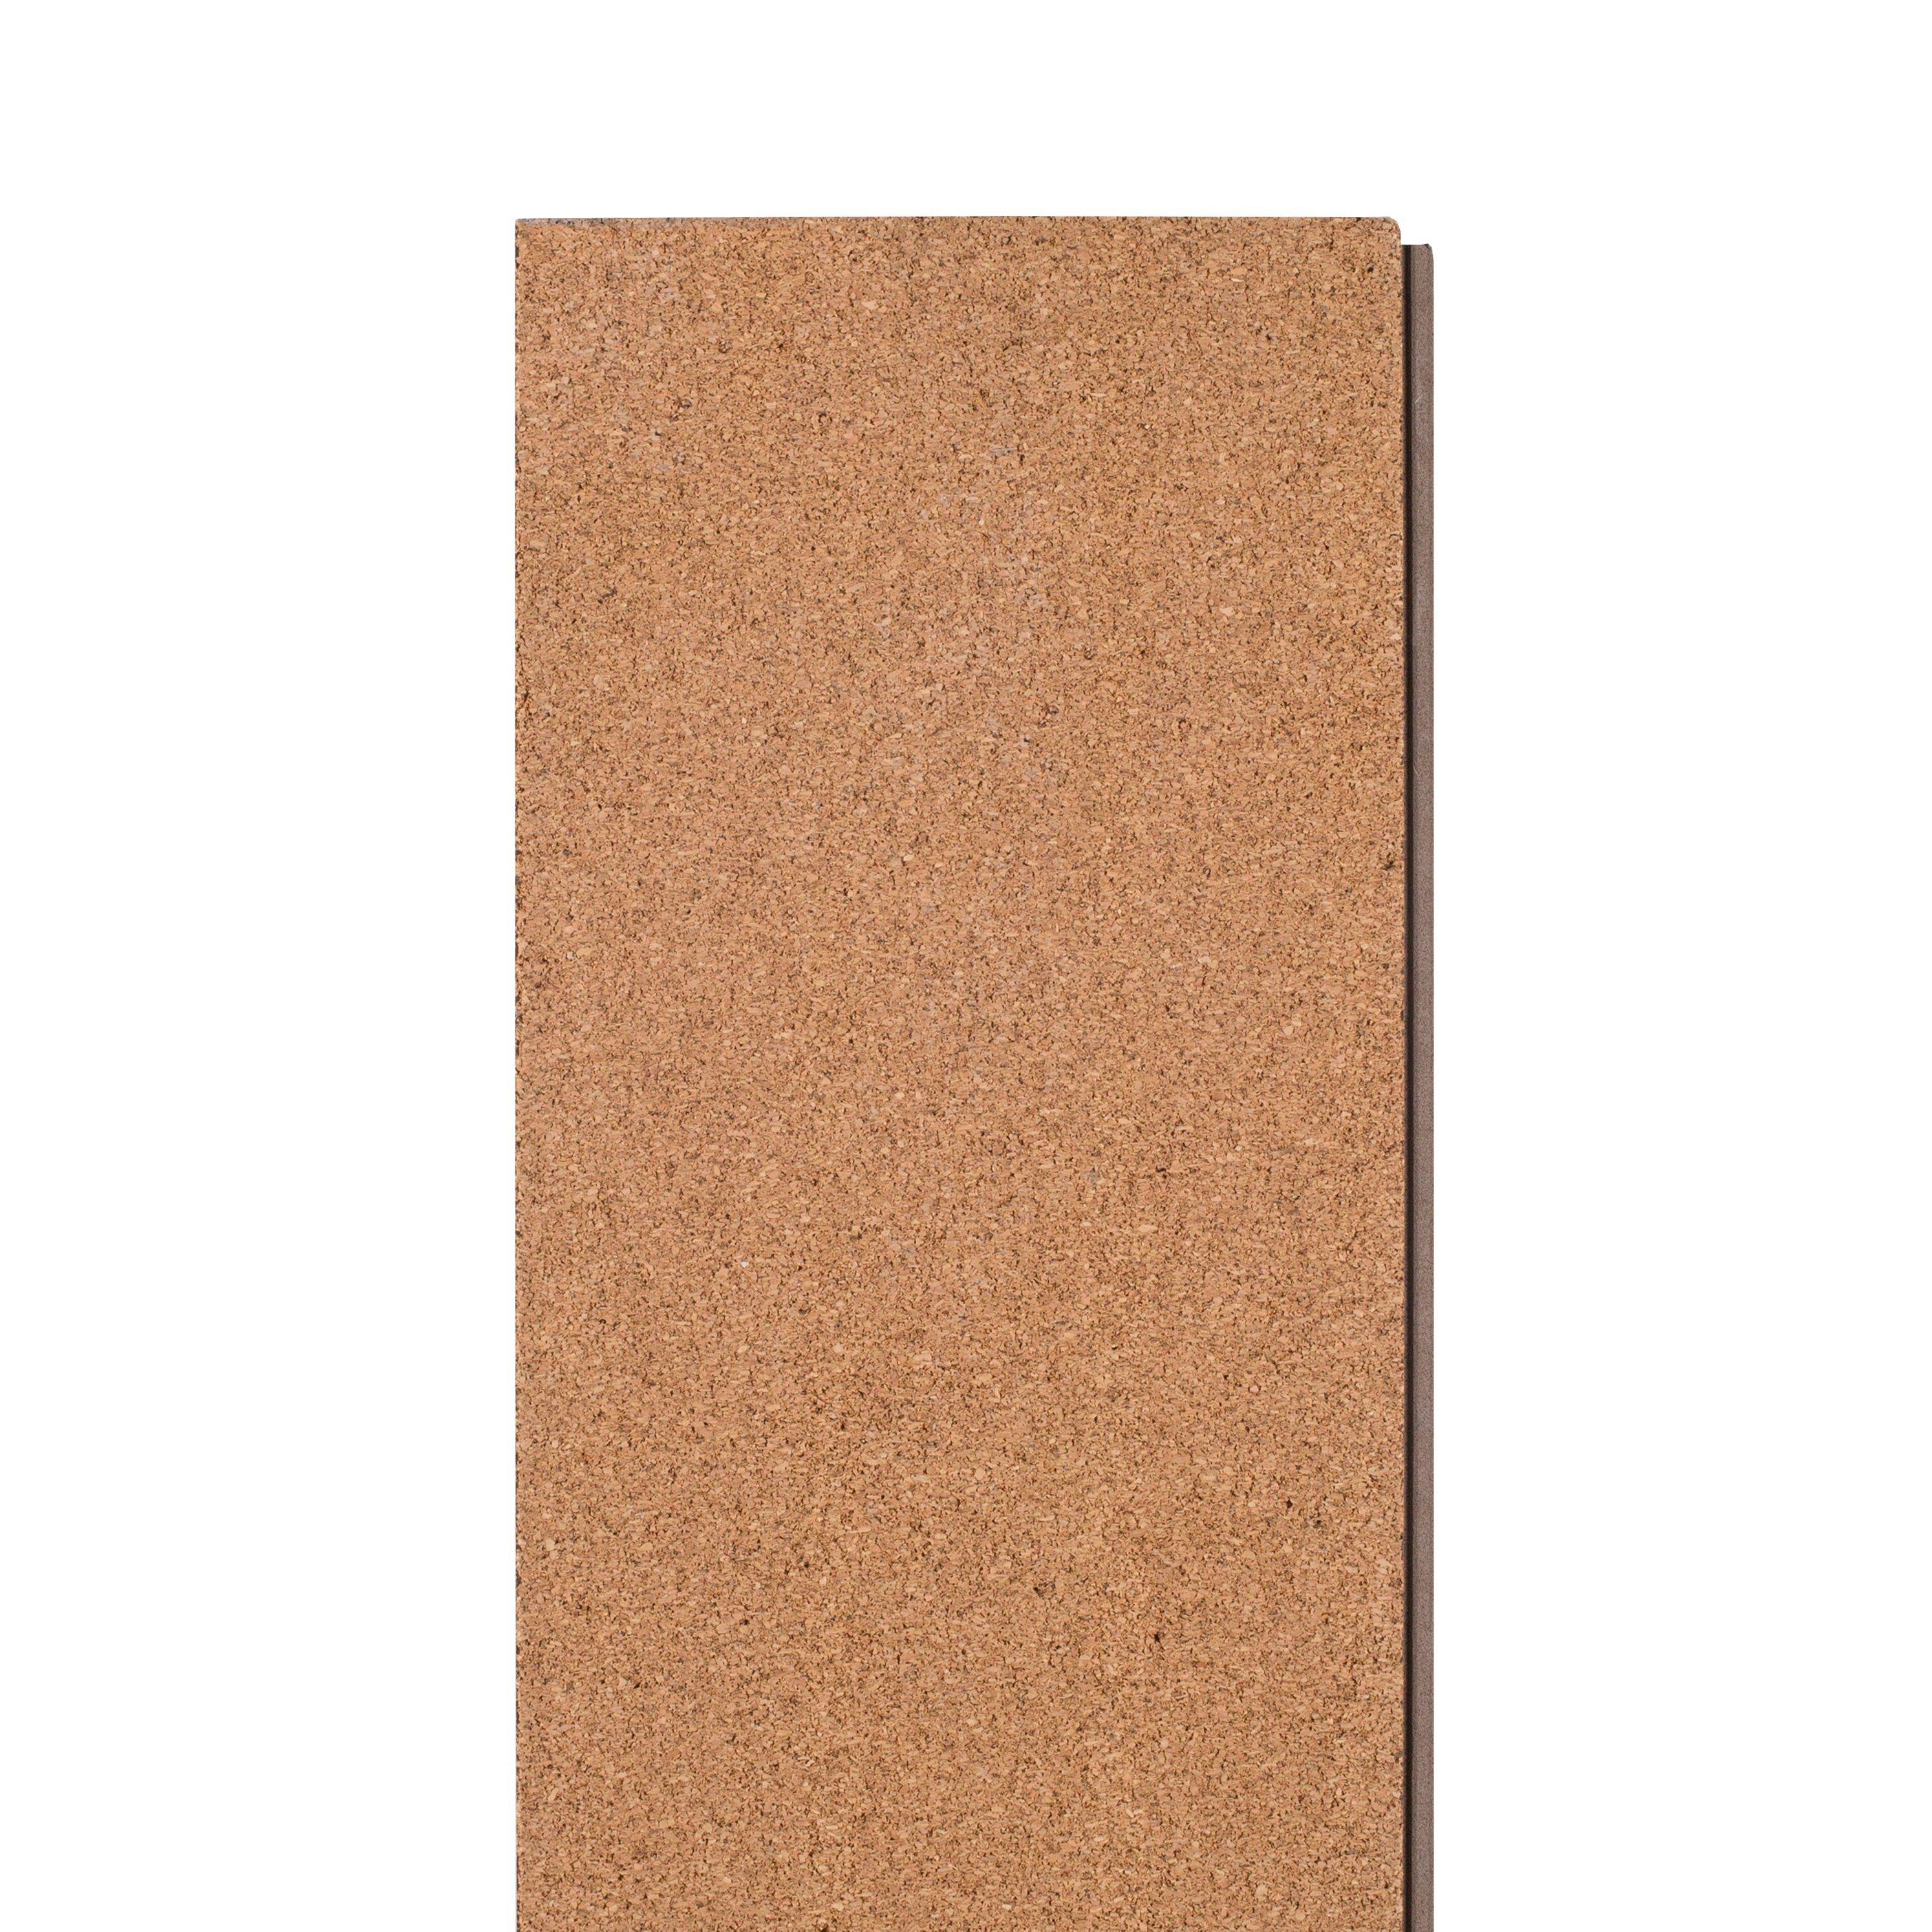 Sahara Gunstock Ceruse Rigid Core Luxury Vinyl Plank - Cork Back